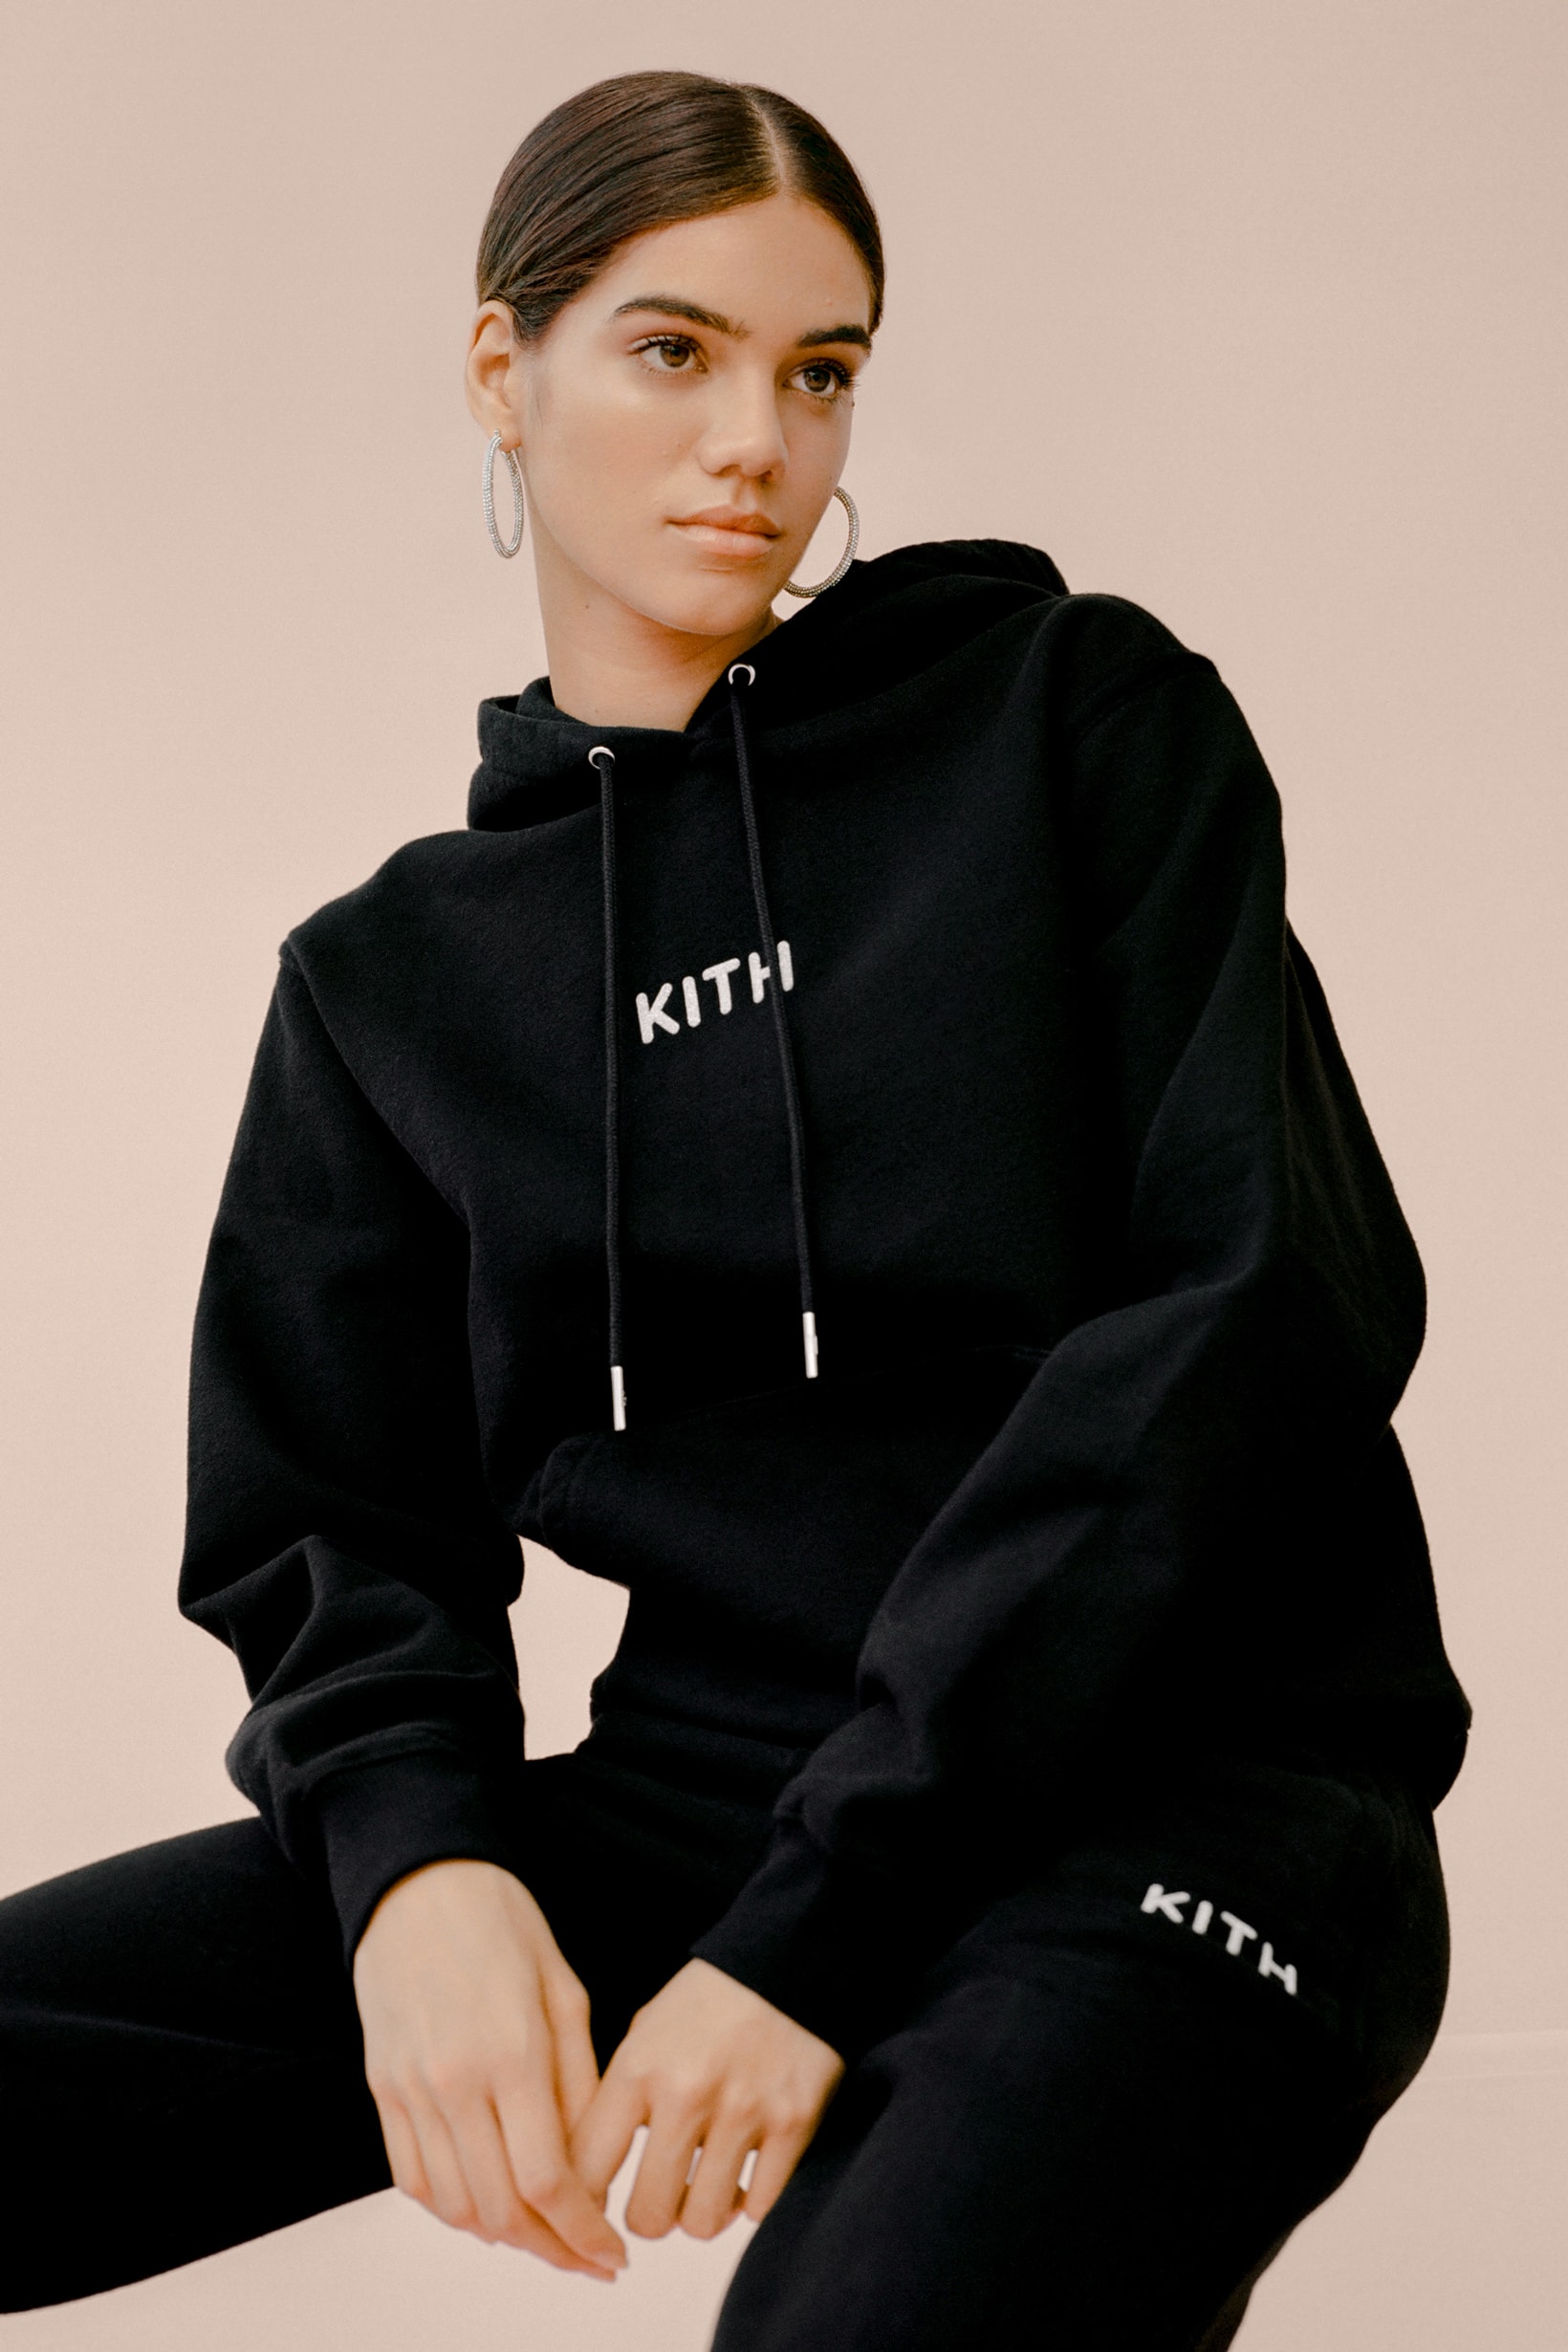 KITH Women's Classics 2019 Hoodies & Sweatpants